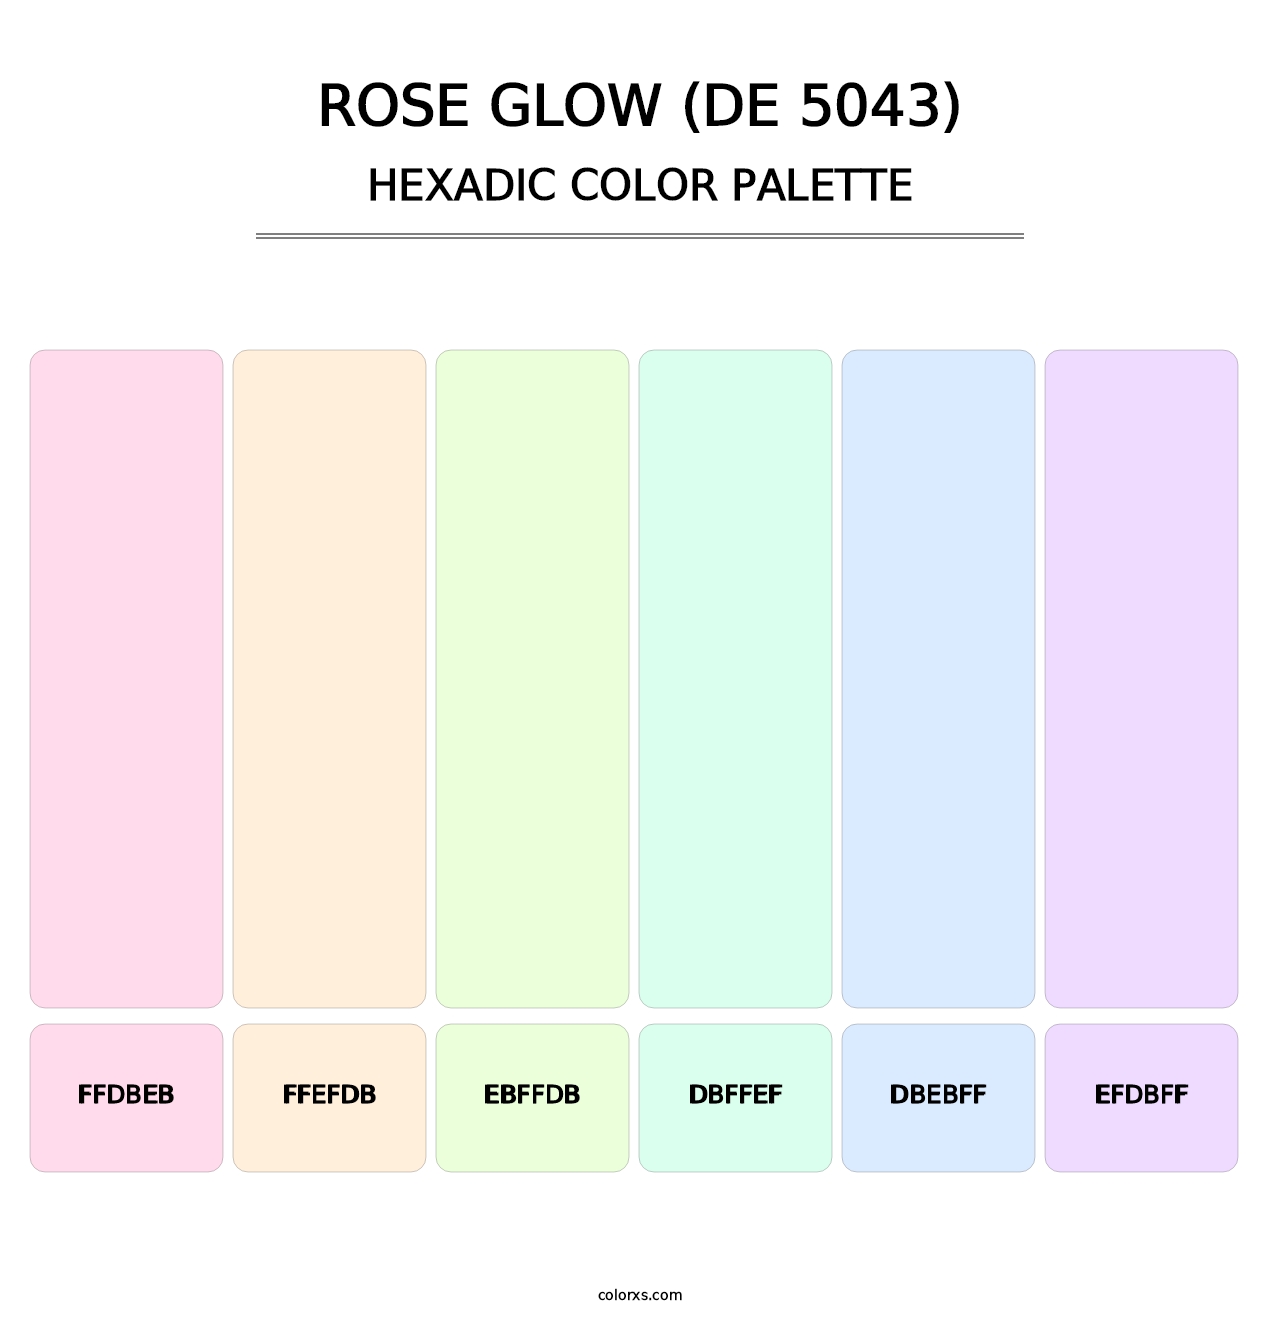 Rose Glow (DE 5043) - Hexadic Color Palette